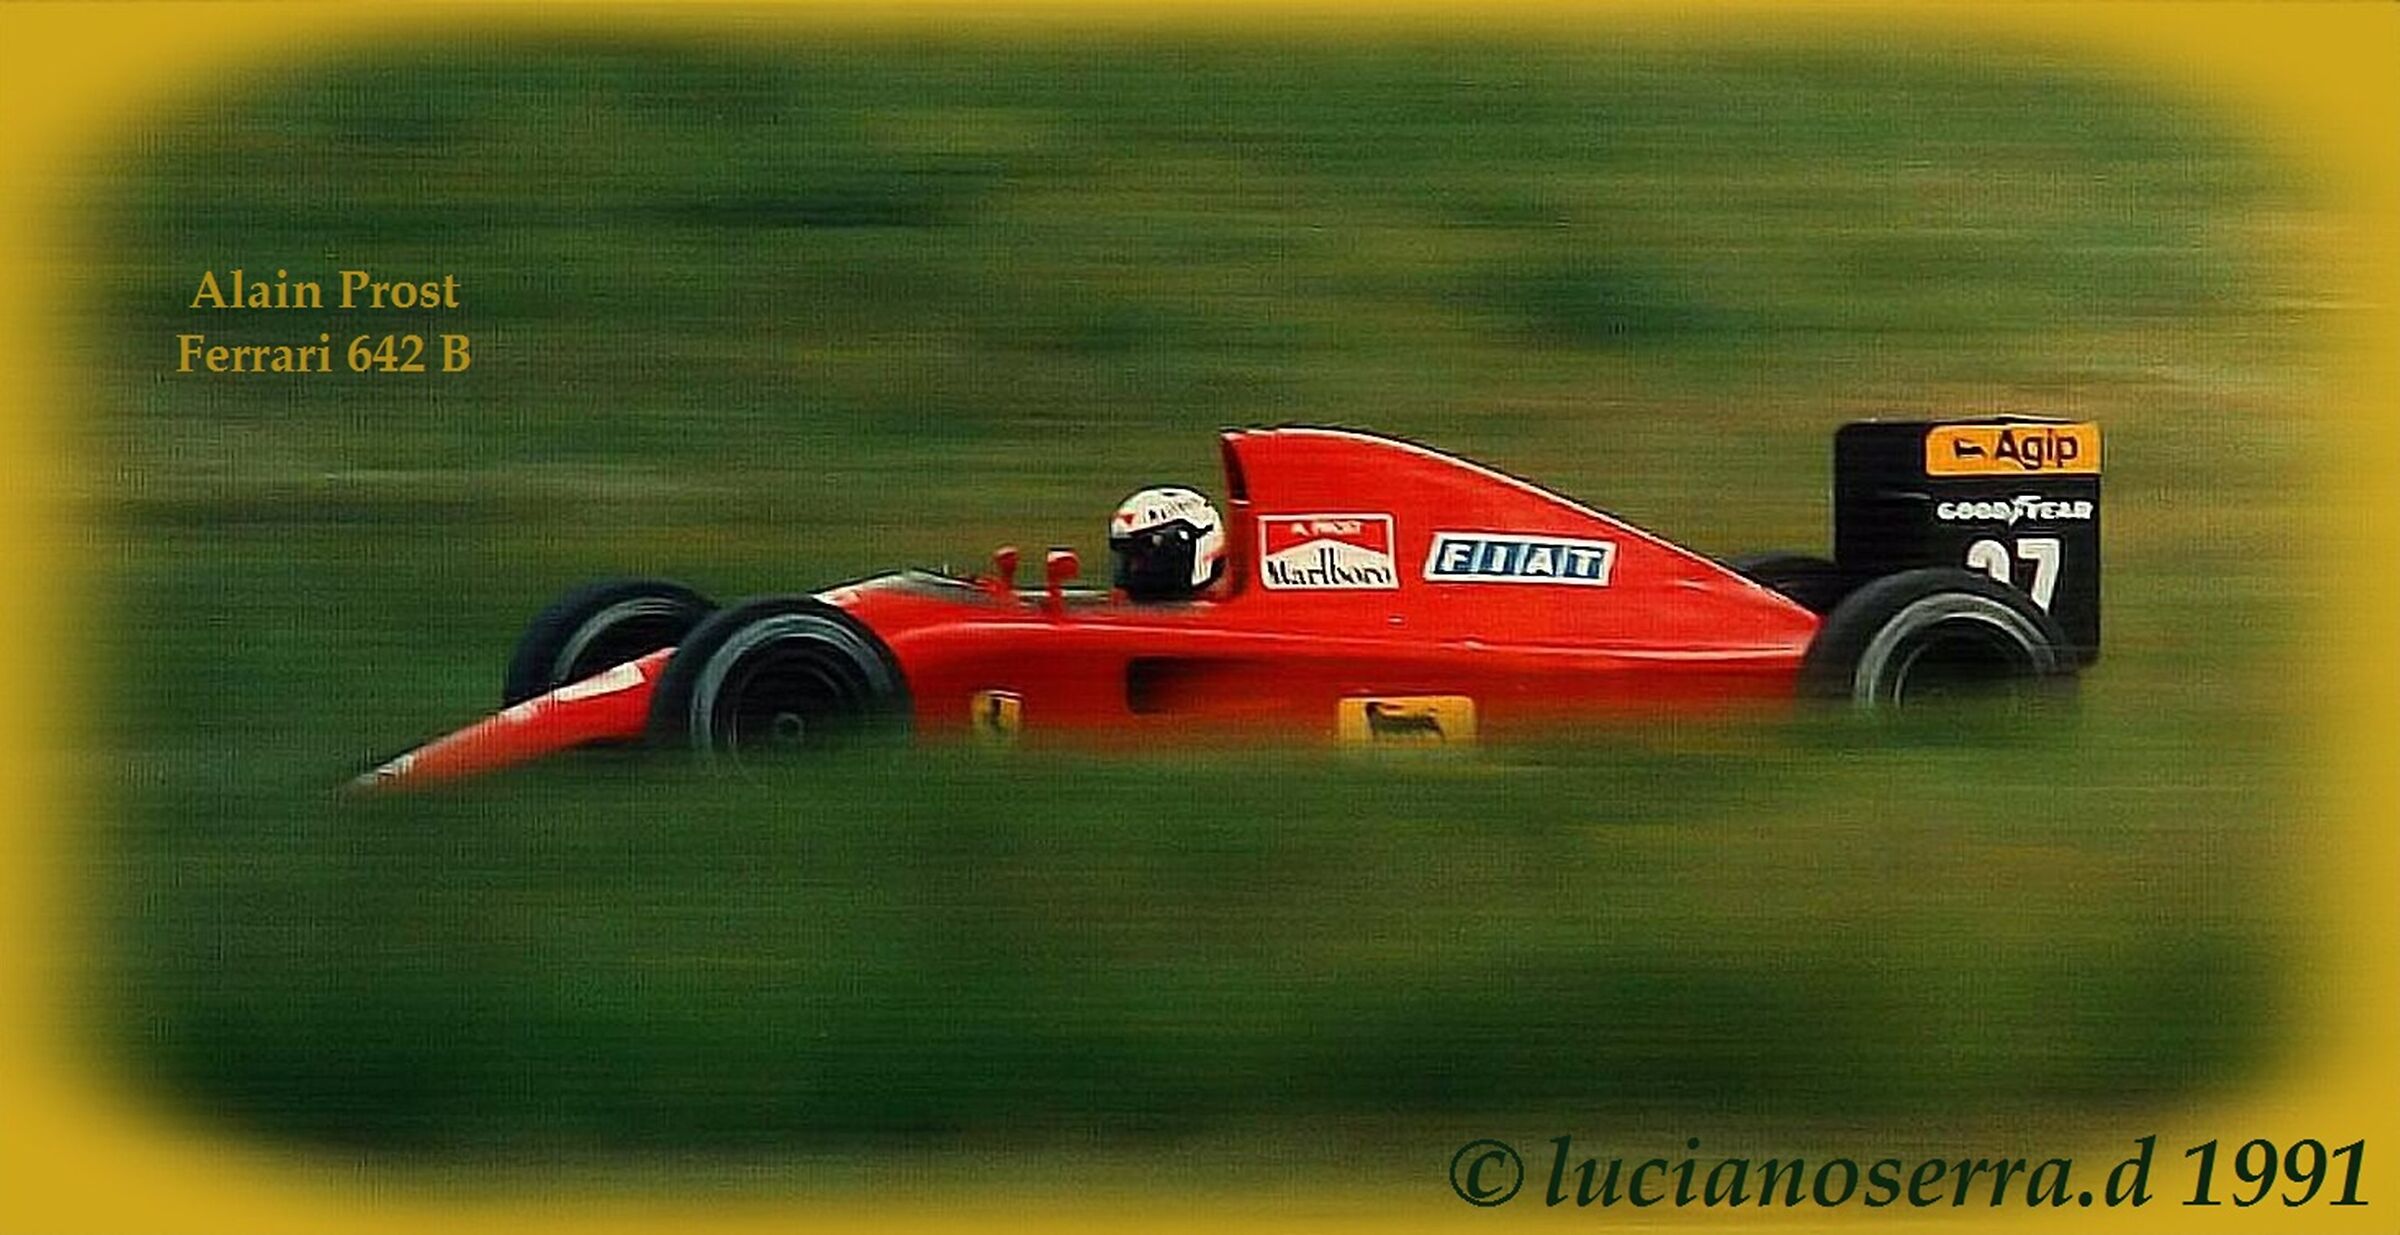 Alan Prost on Ferrari 642B 2-1991...